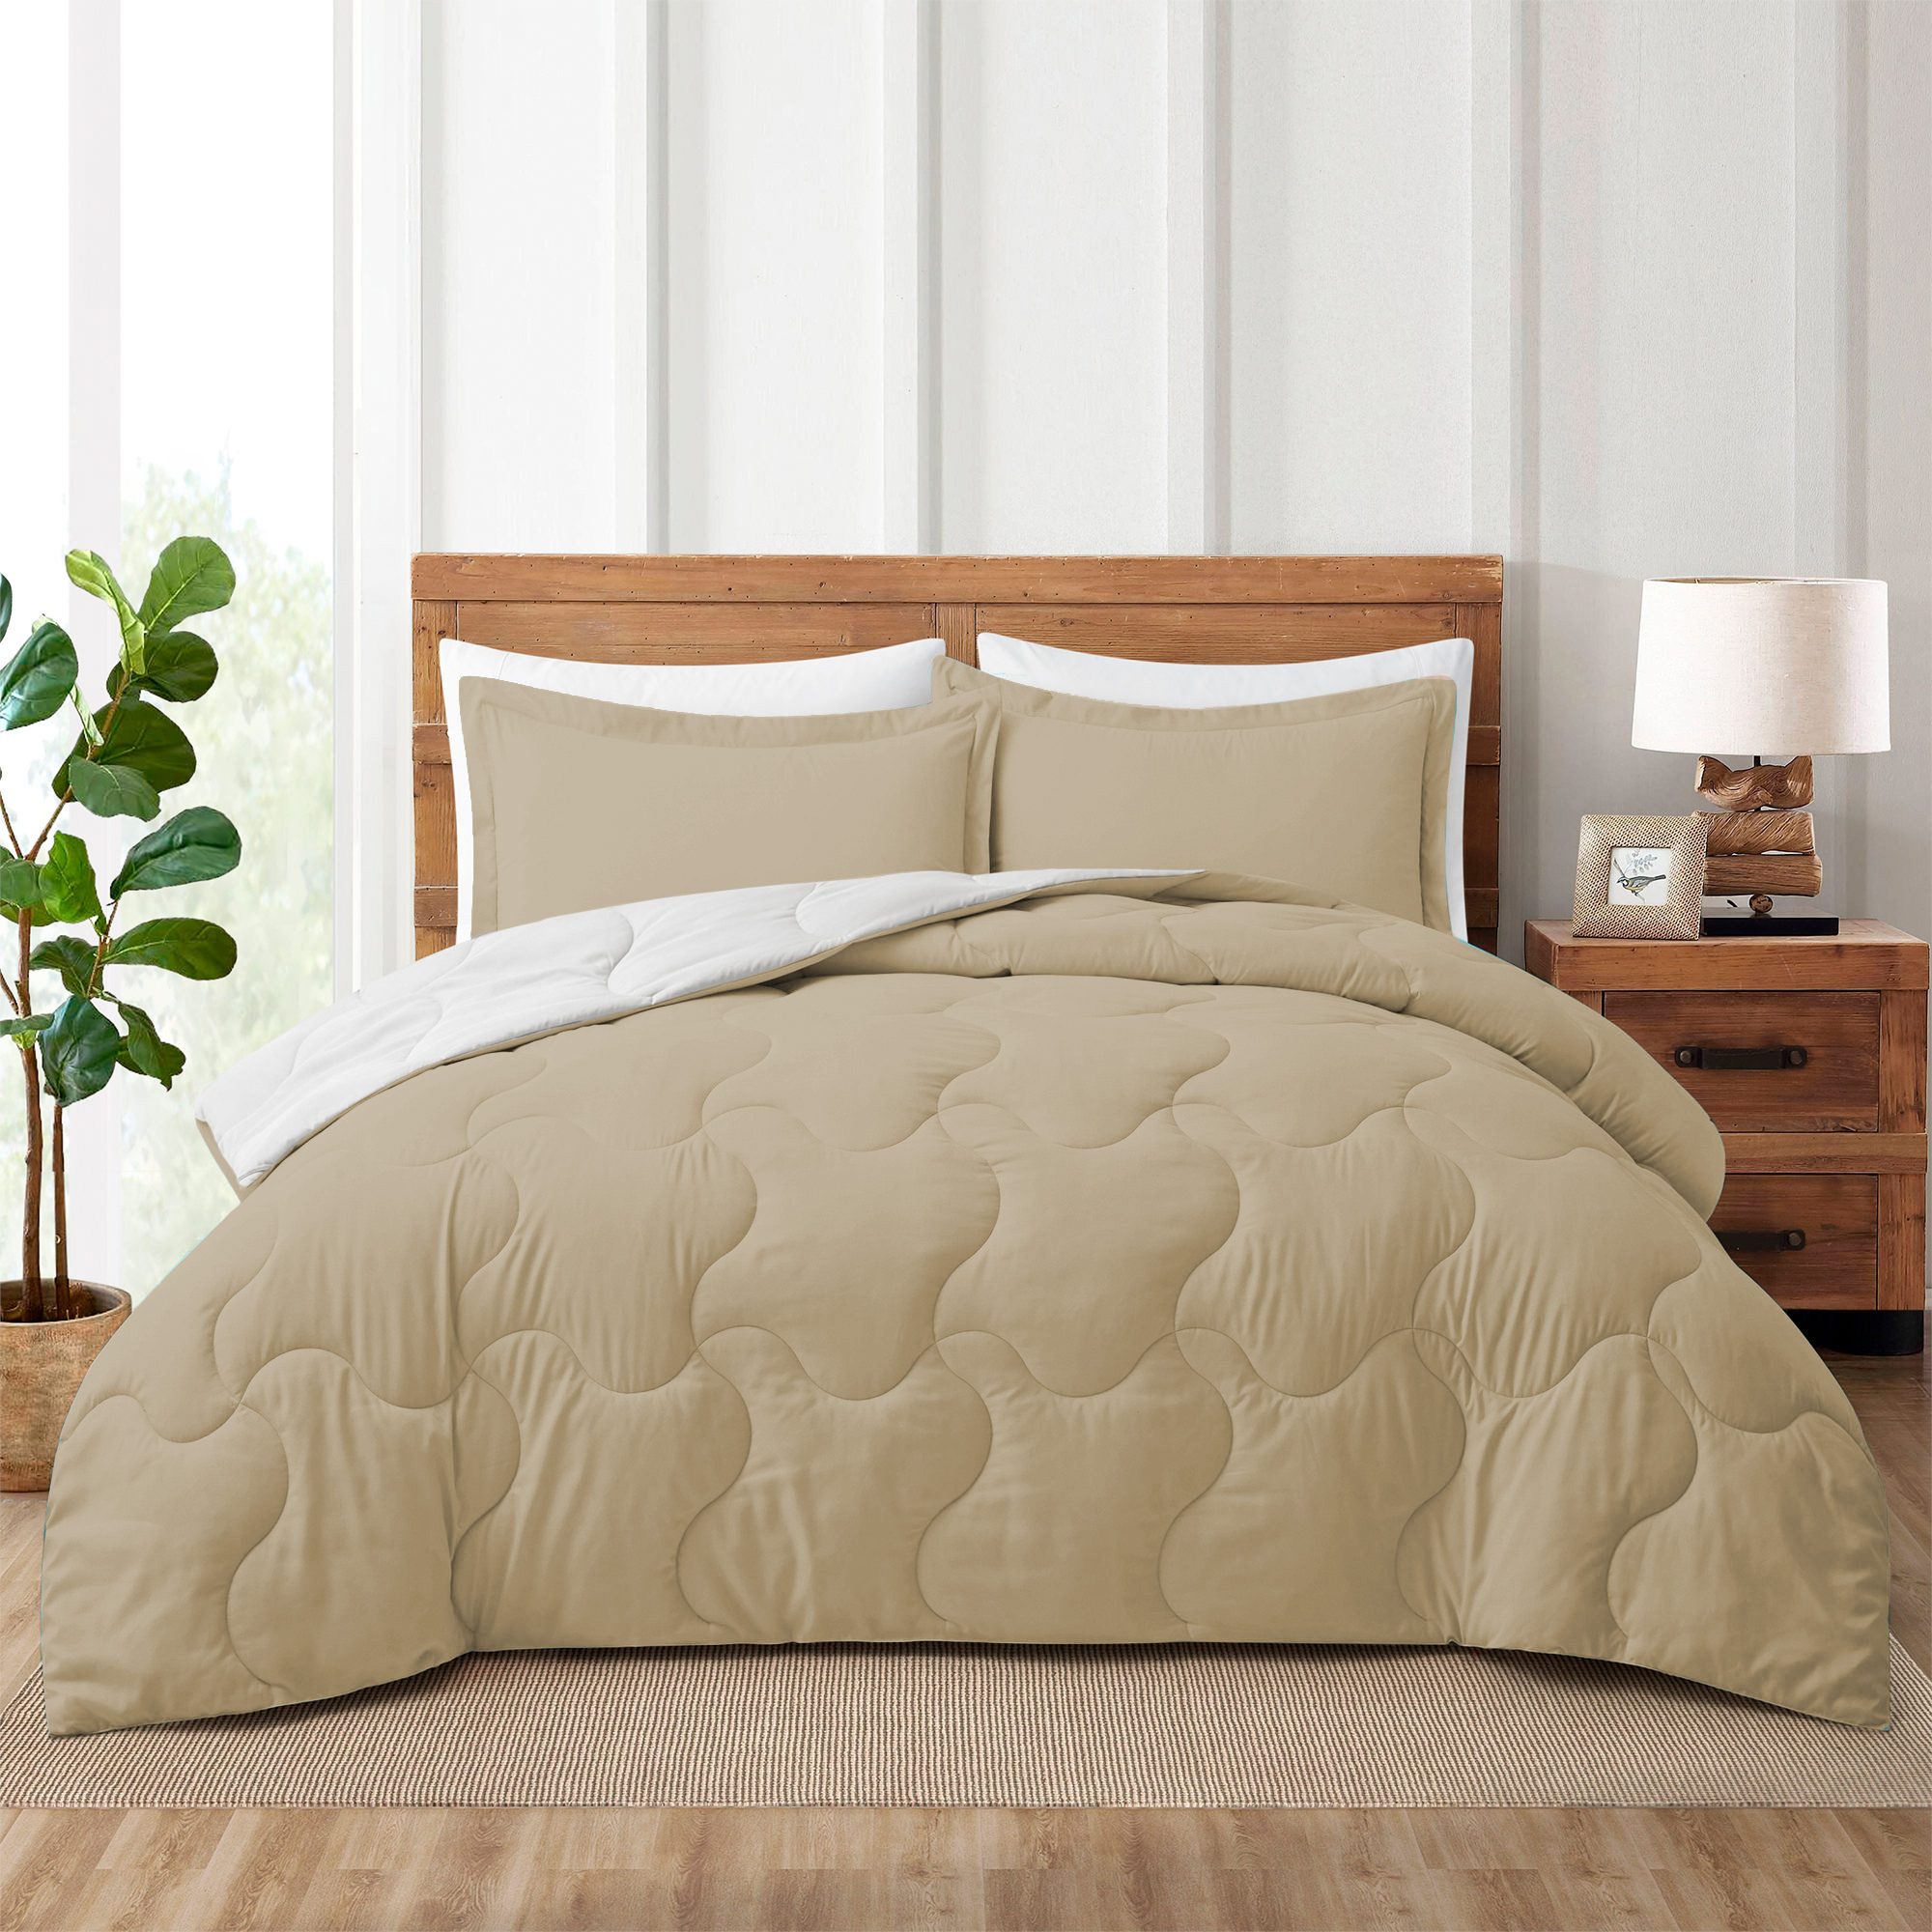 Luxury Reversible Down Alternative Machine Washable Comforter Set With Shams - King Size